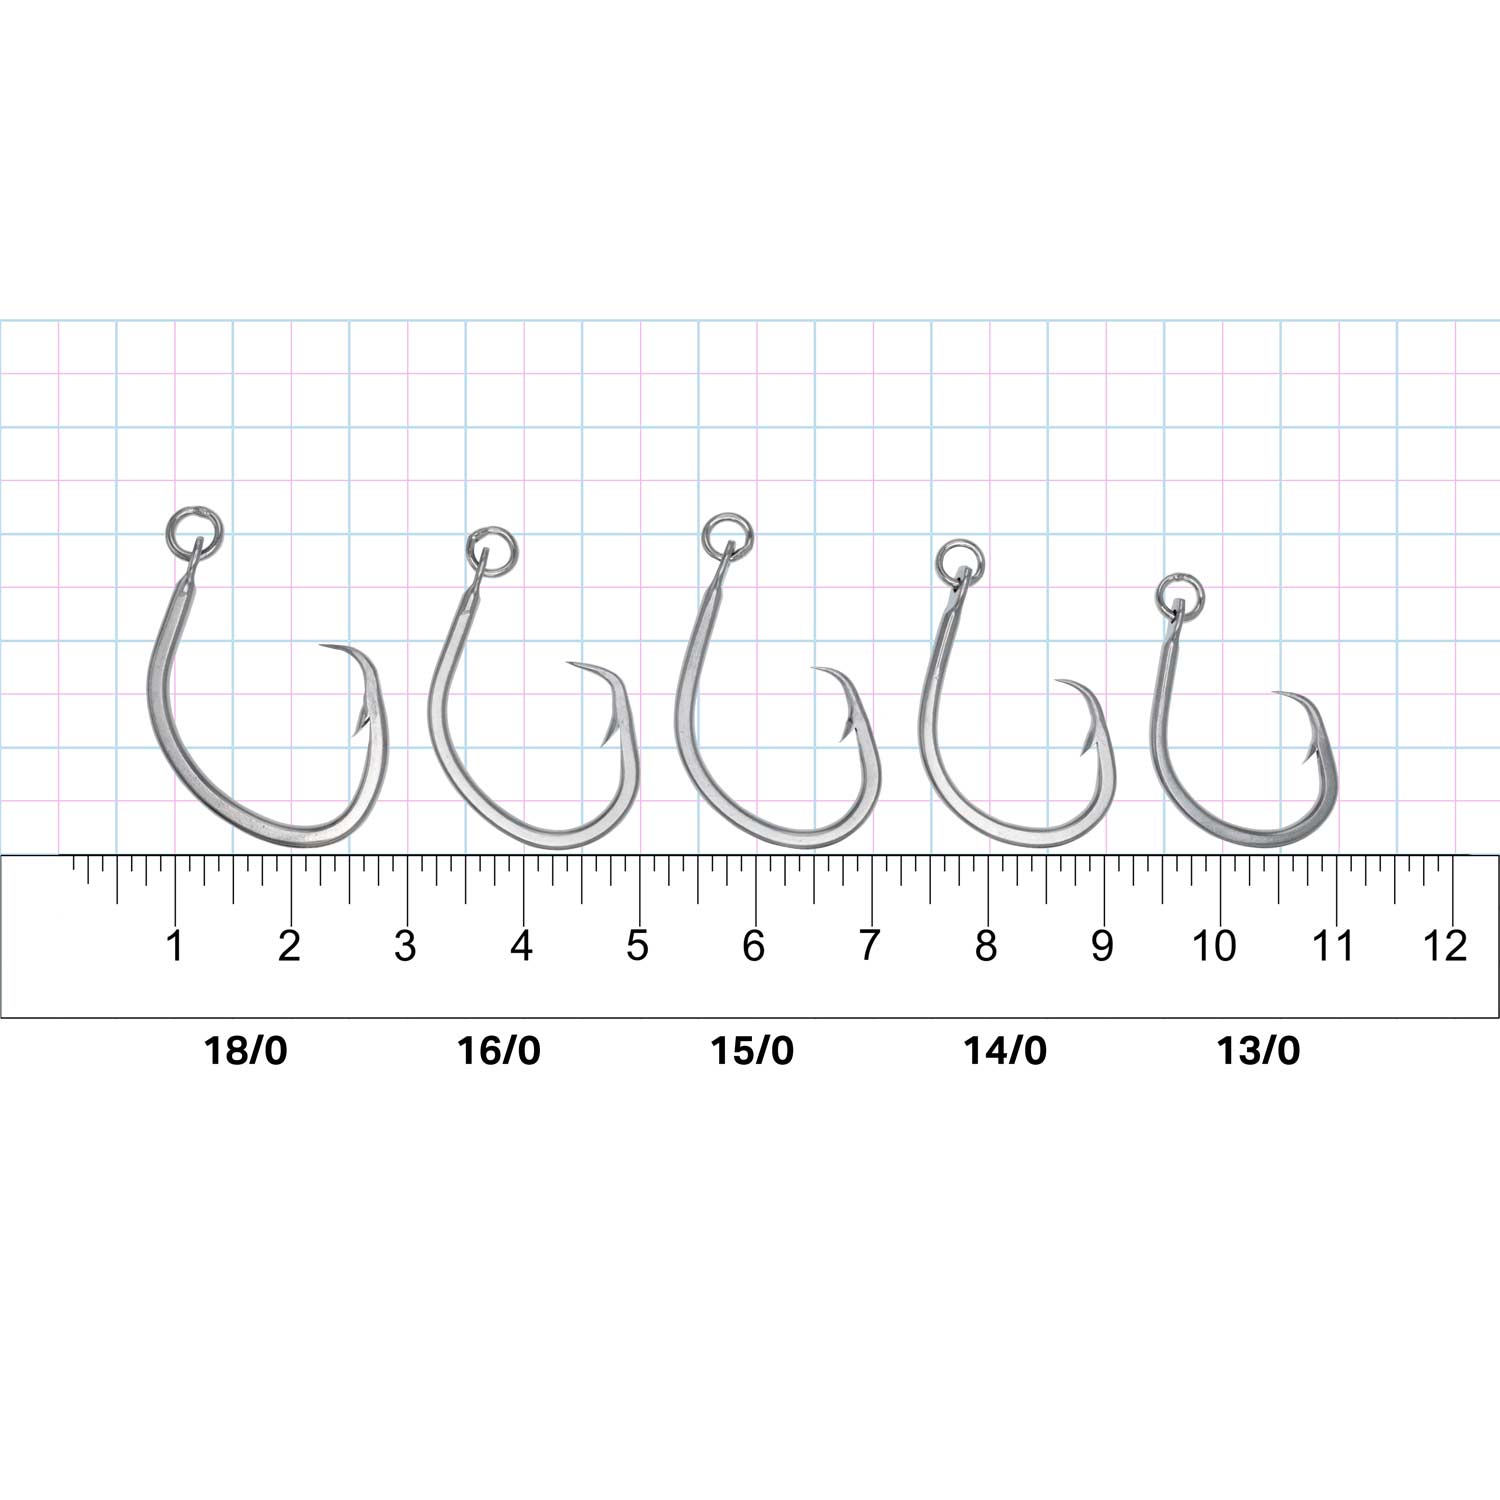 Rite Angler heavy duty Ringed Circle Hook Size chart